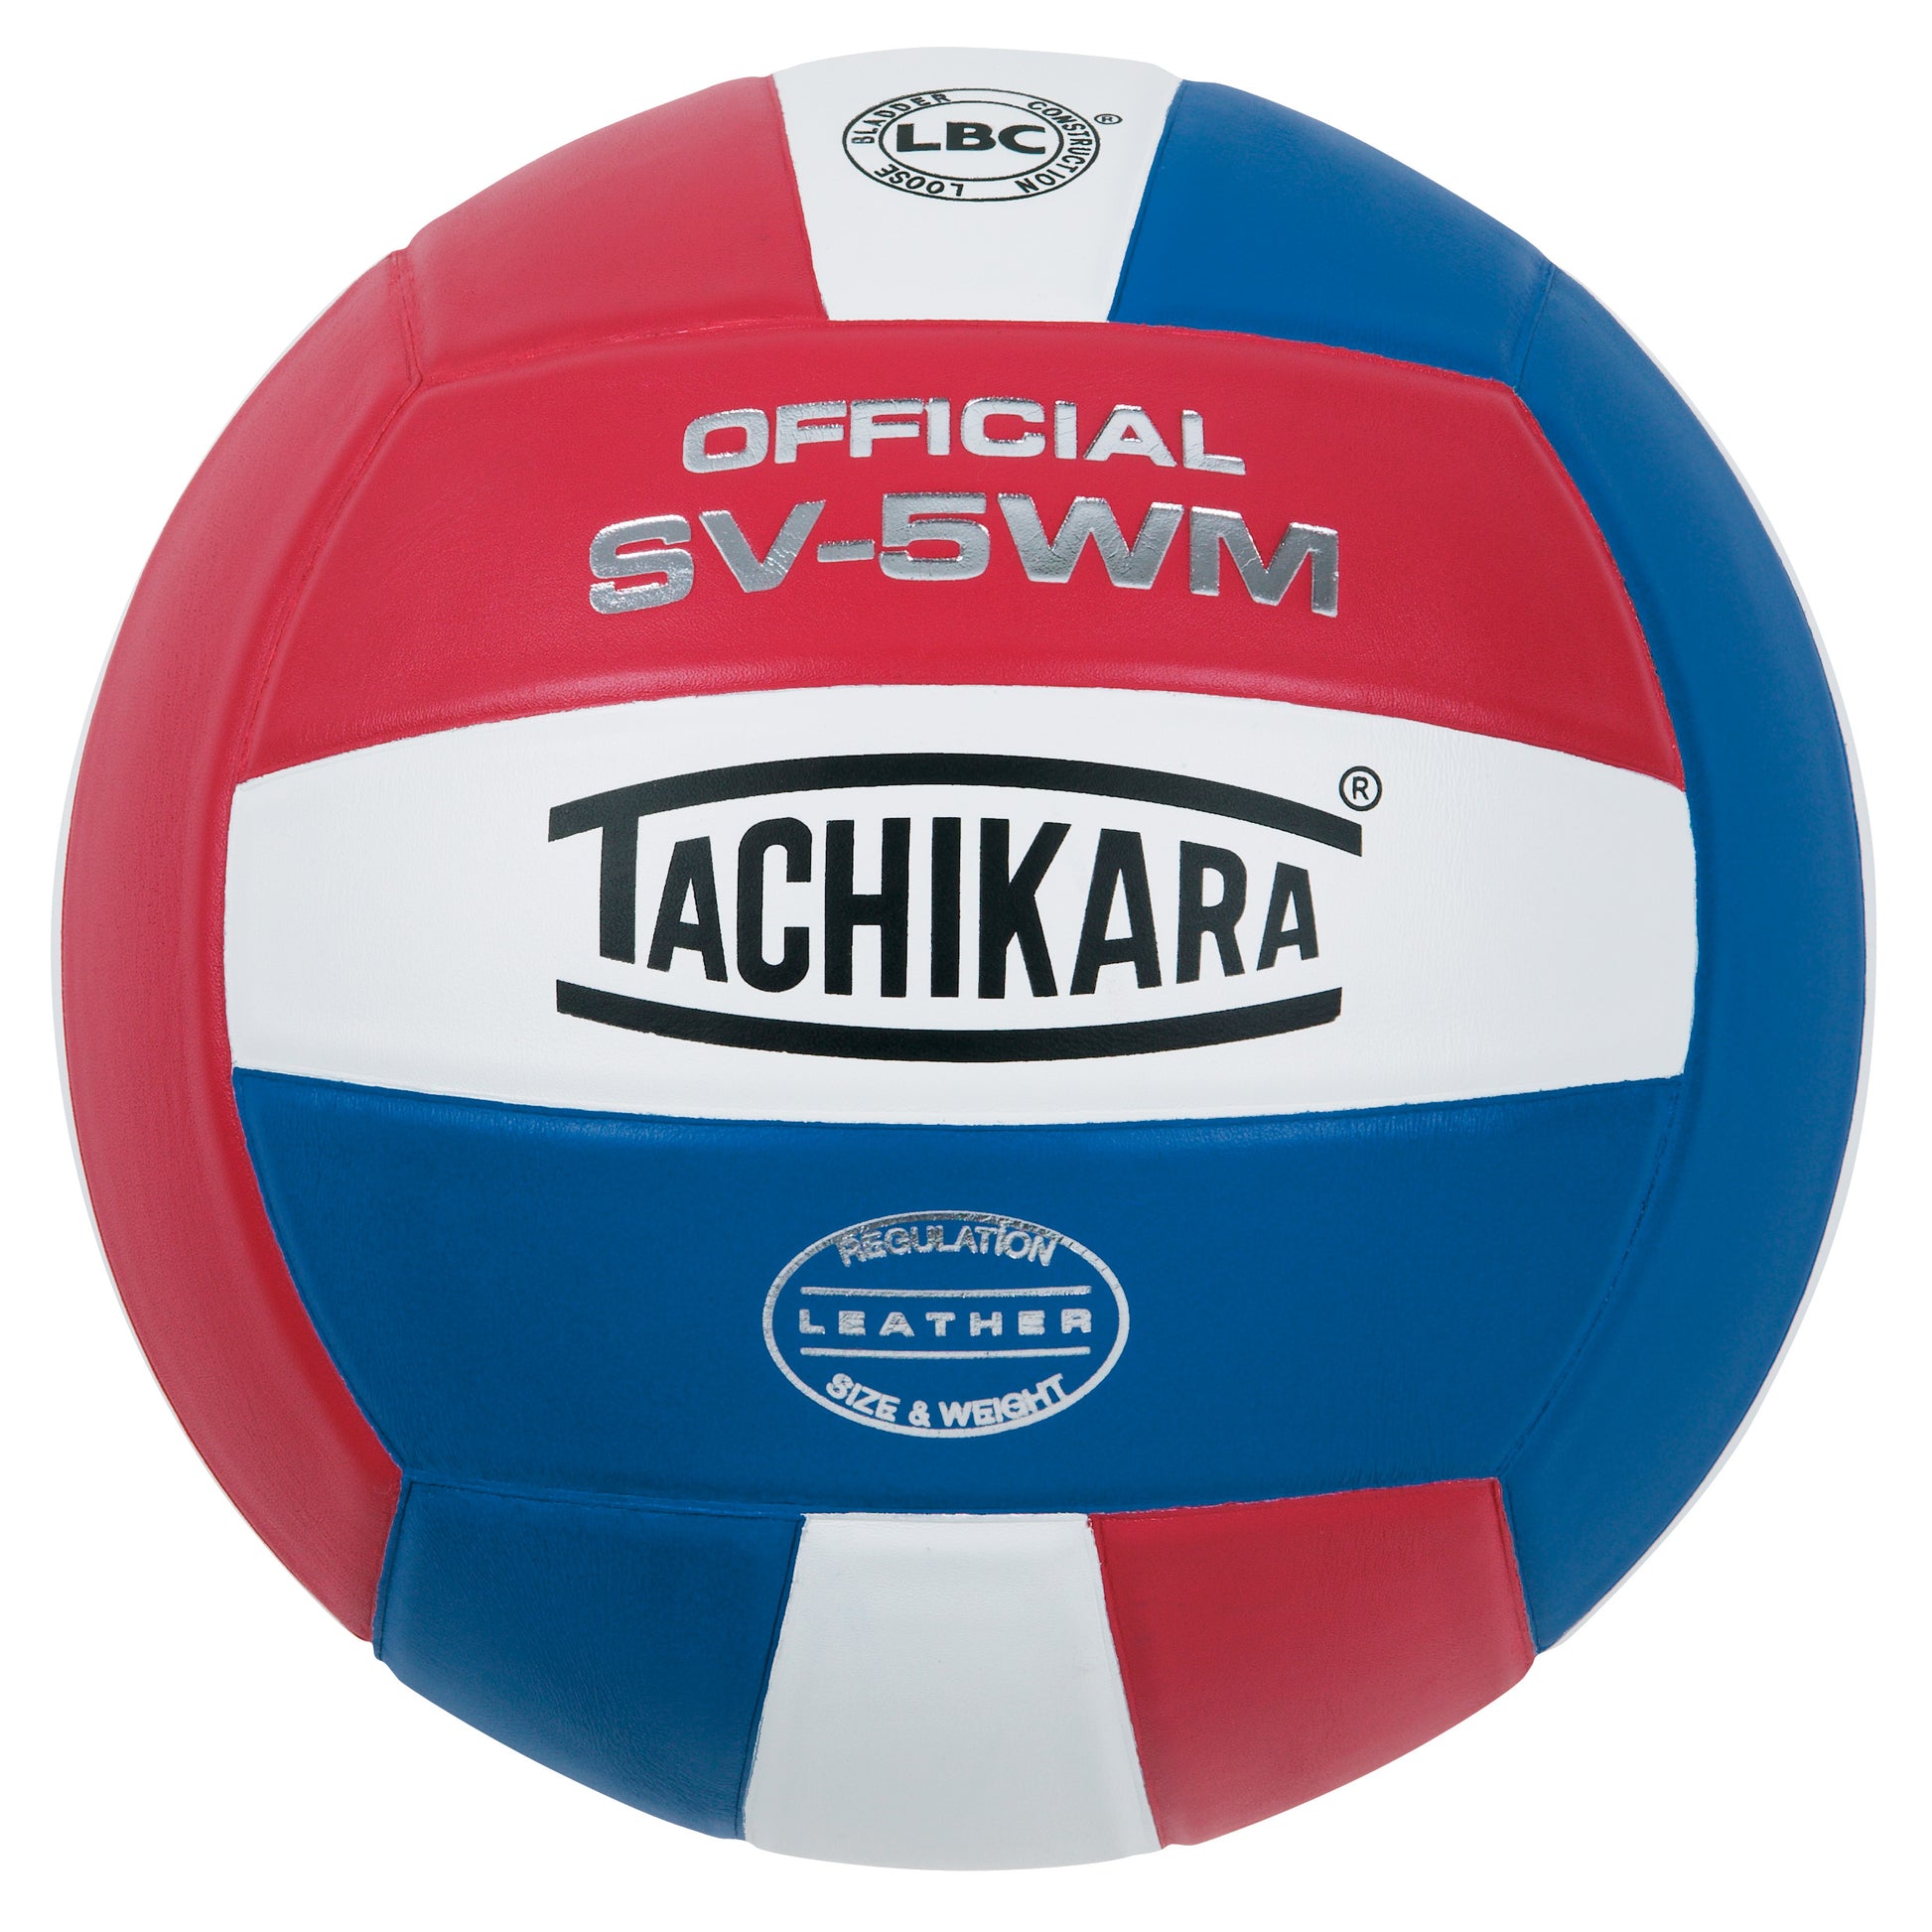 Tachikara Official SV-5WM Game Volleyball Scarlet/White/Royal